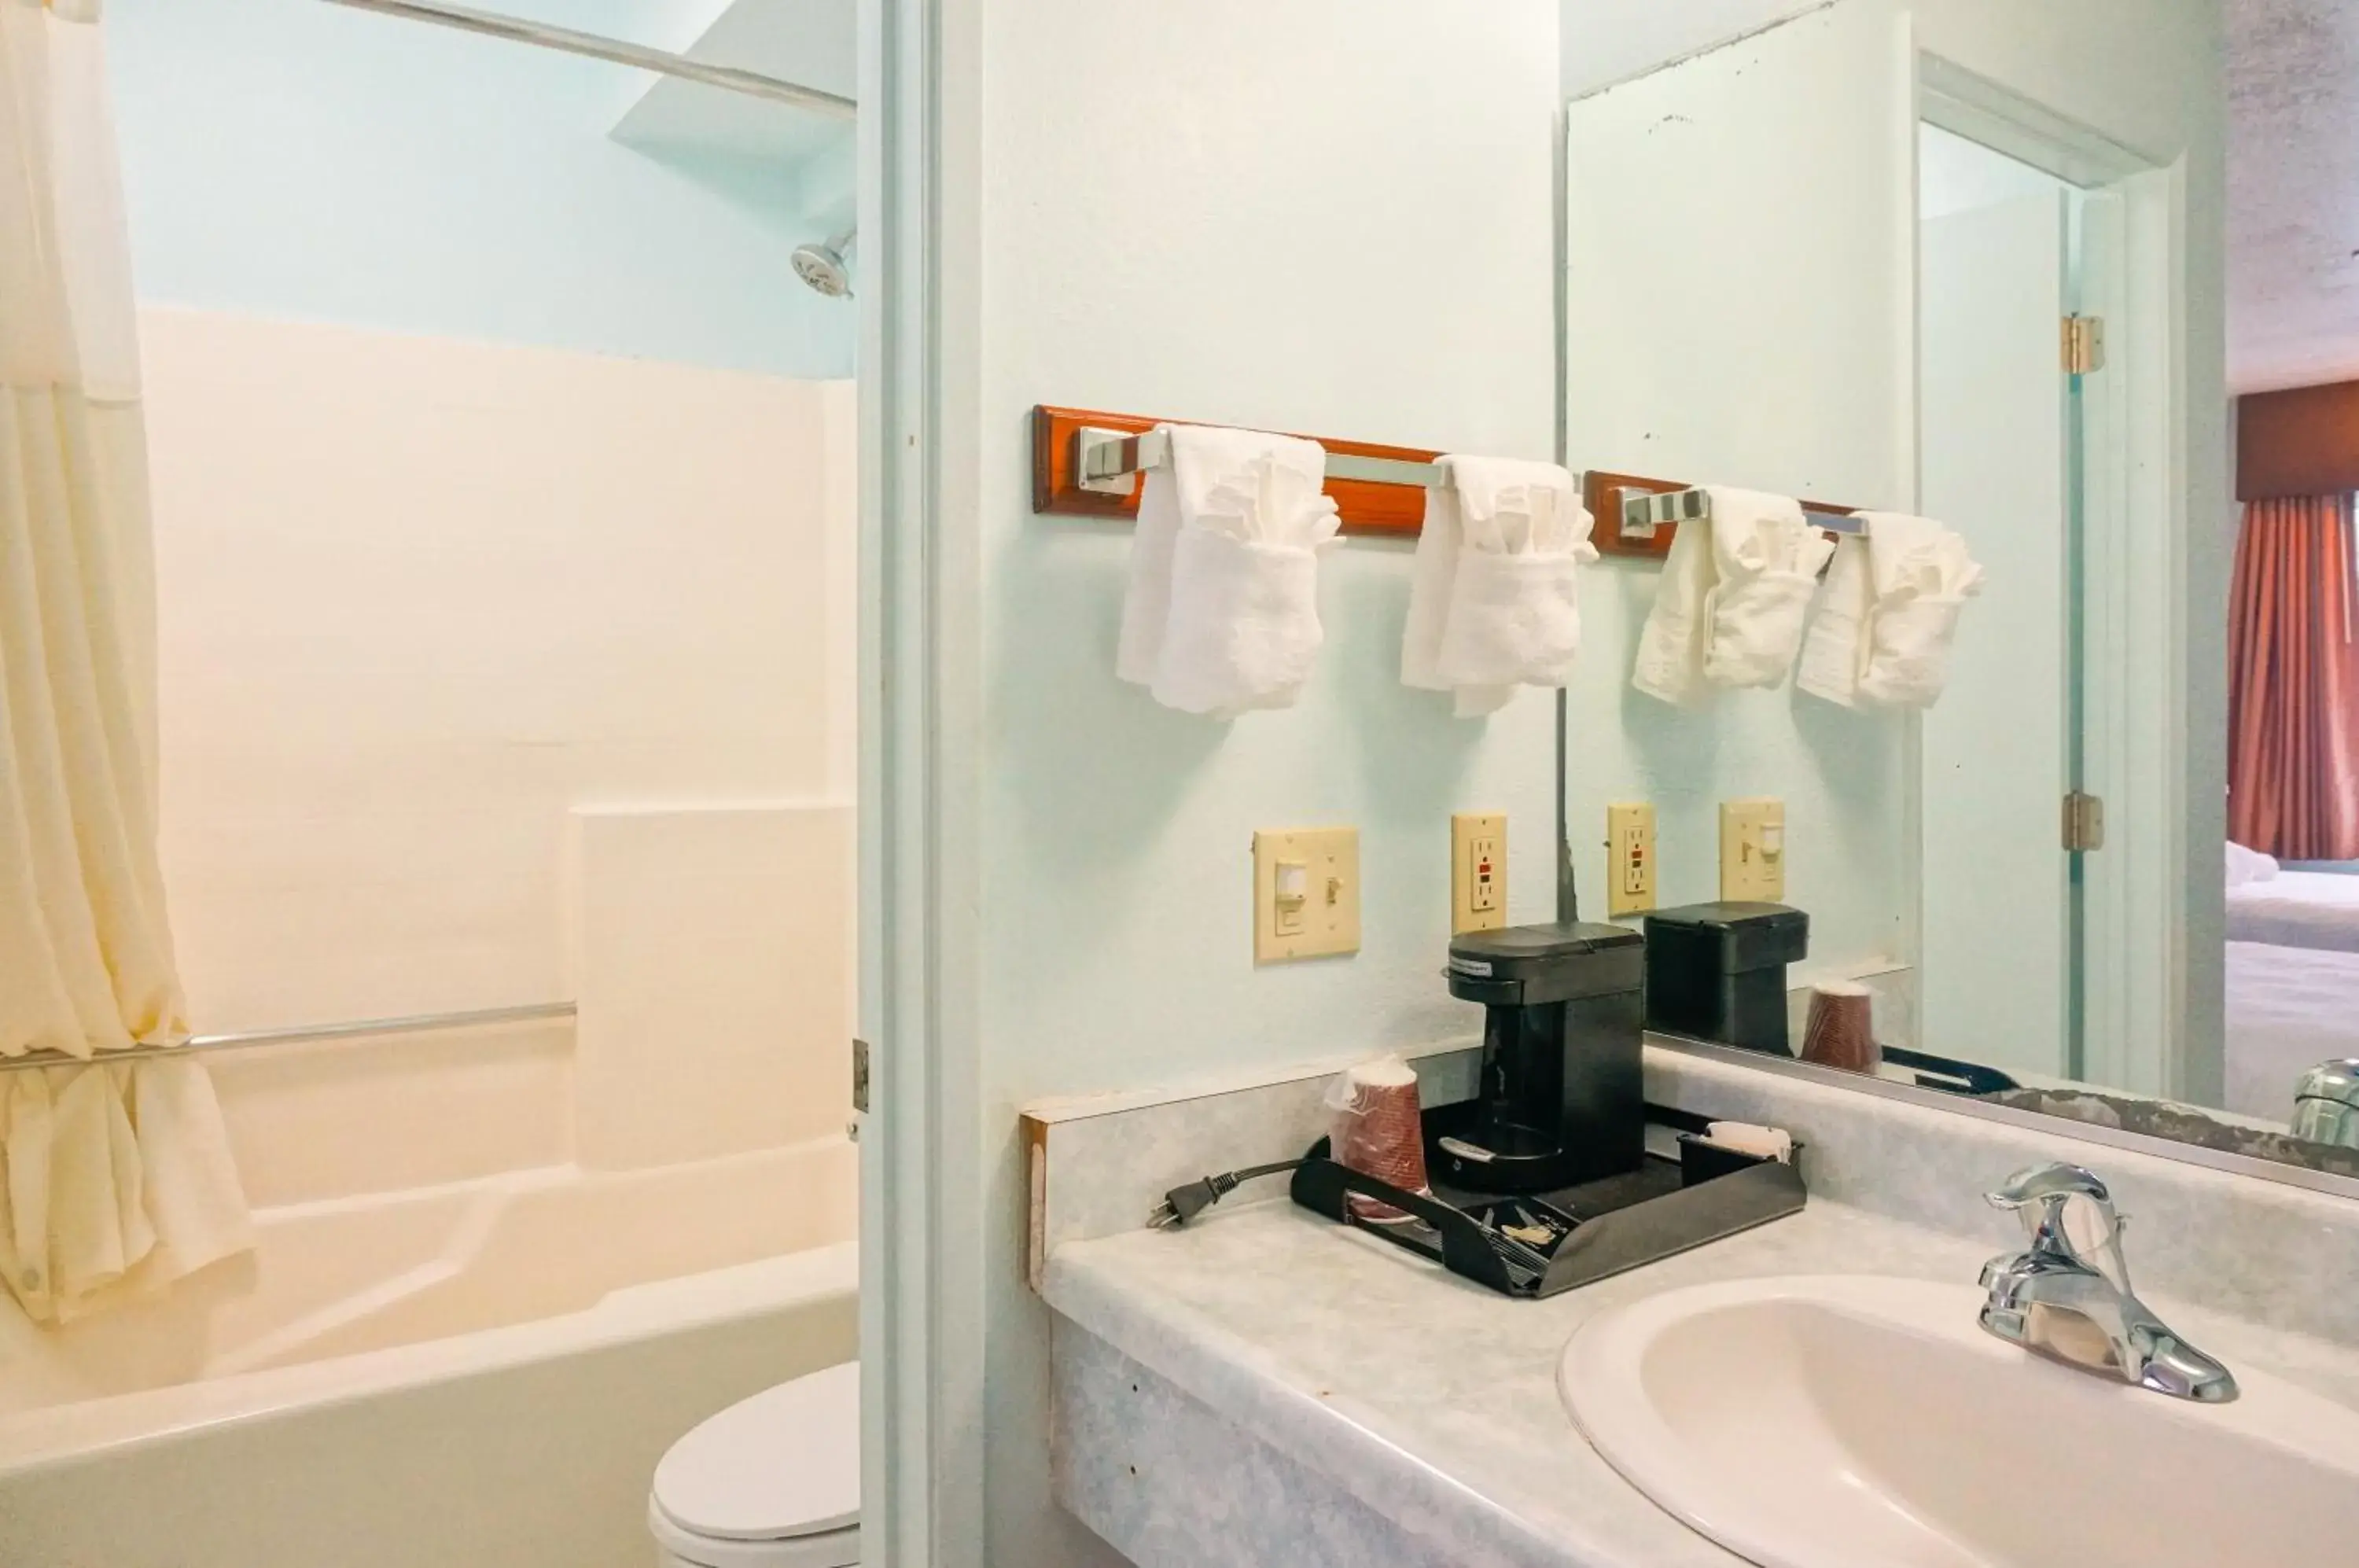 Bathroom in OceanView Motel